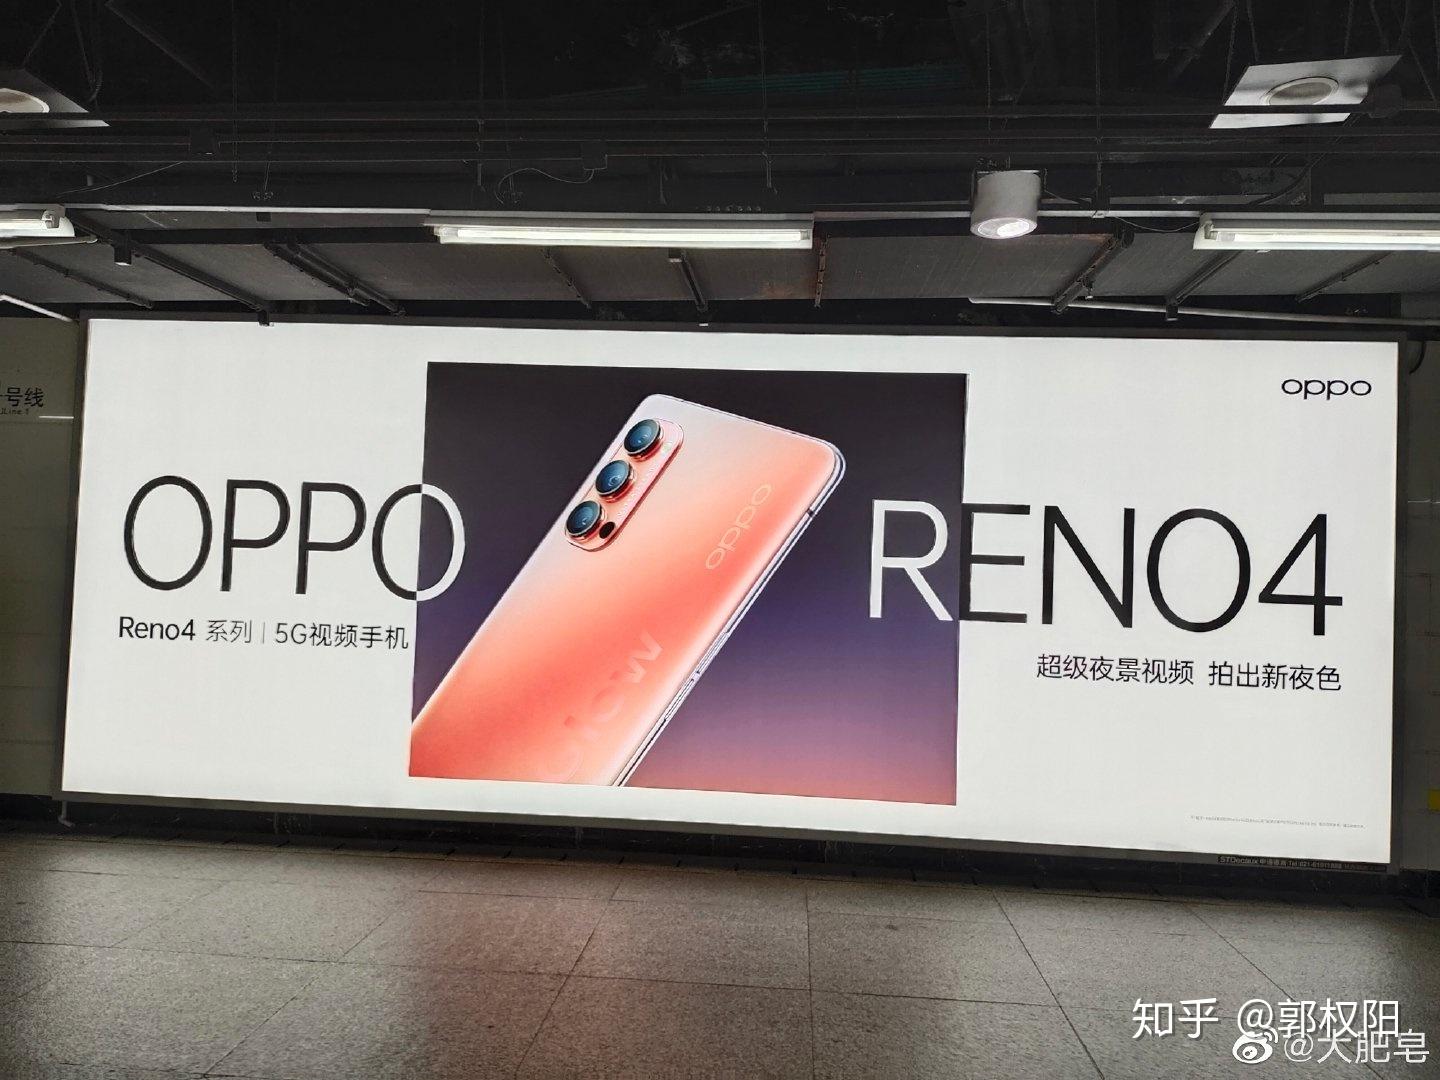 reno4 pro是oppo近期内推出的全新5g视频手机,其正面采用了目前正流行